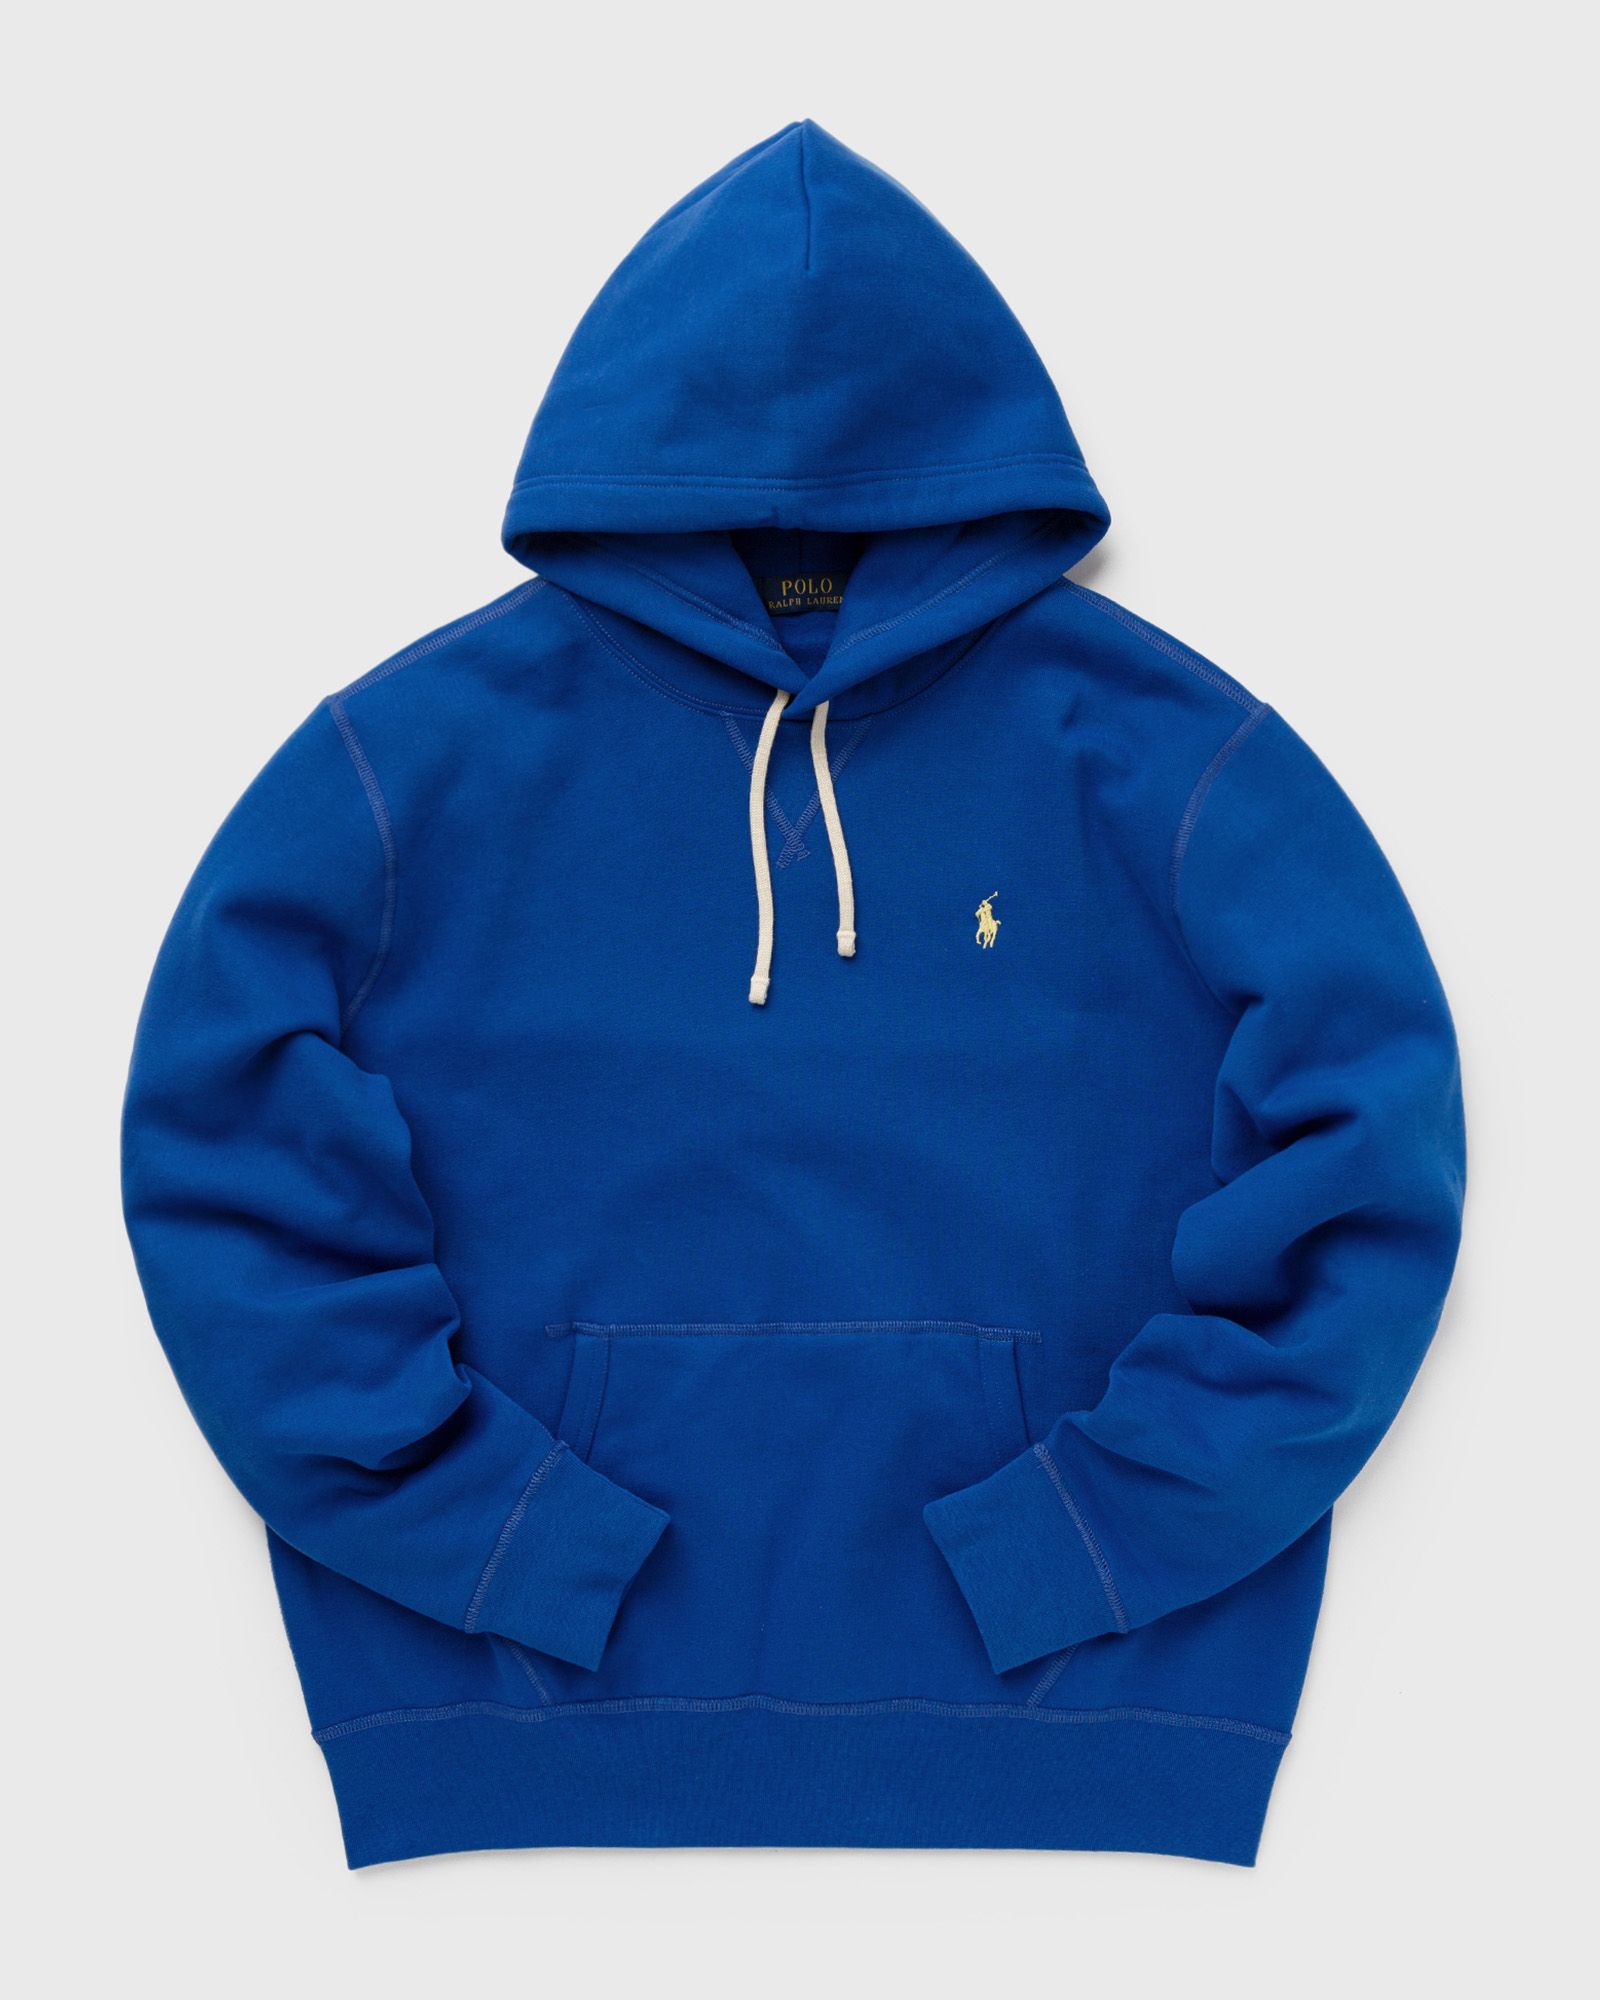 Polo Ralph Lauren - lspohood m2-long sleeve-knit men hoodies blue in größe:xl